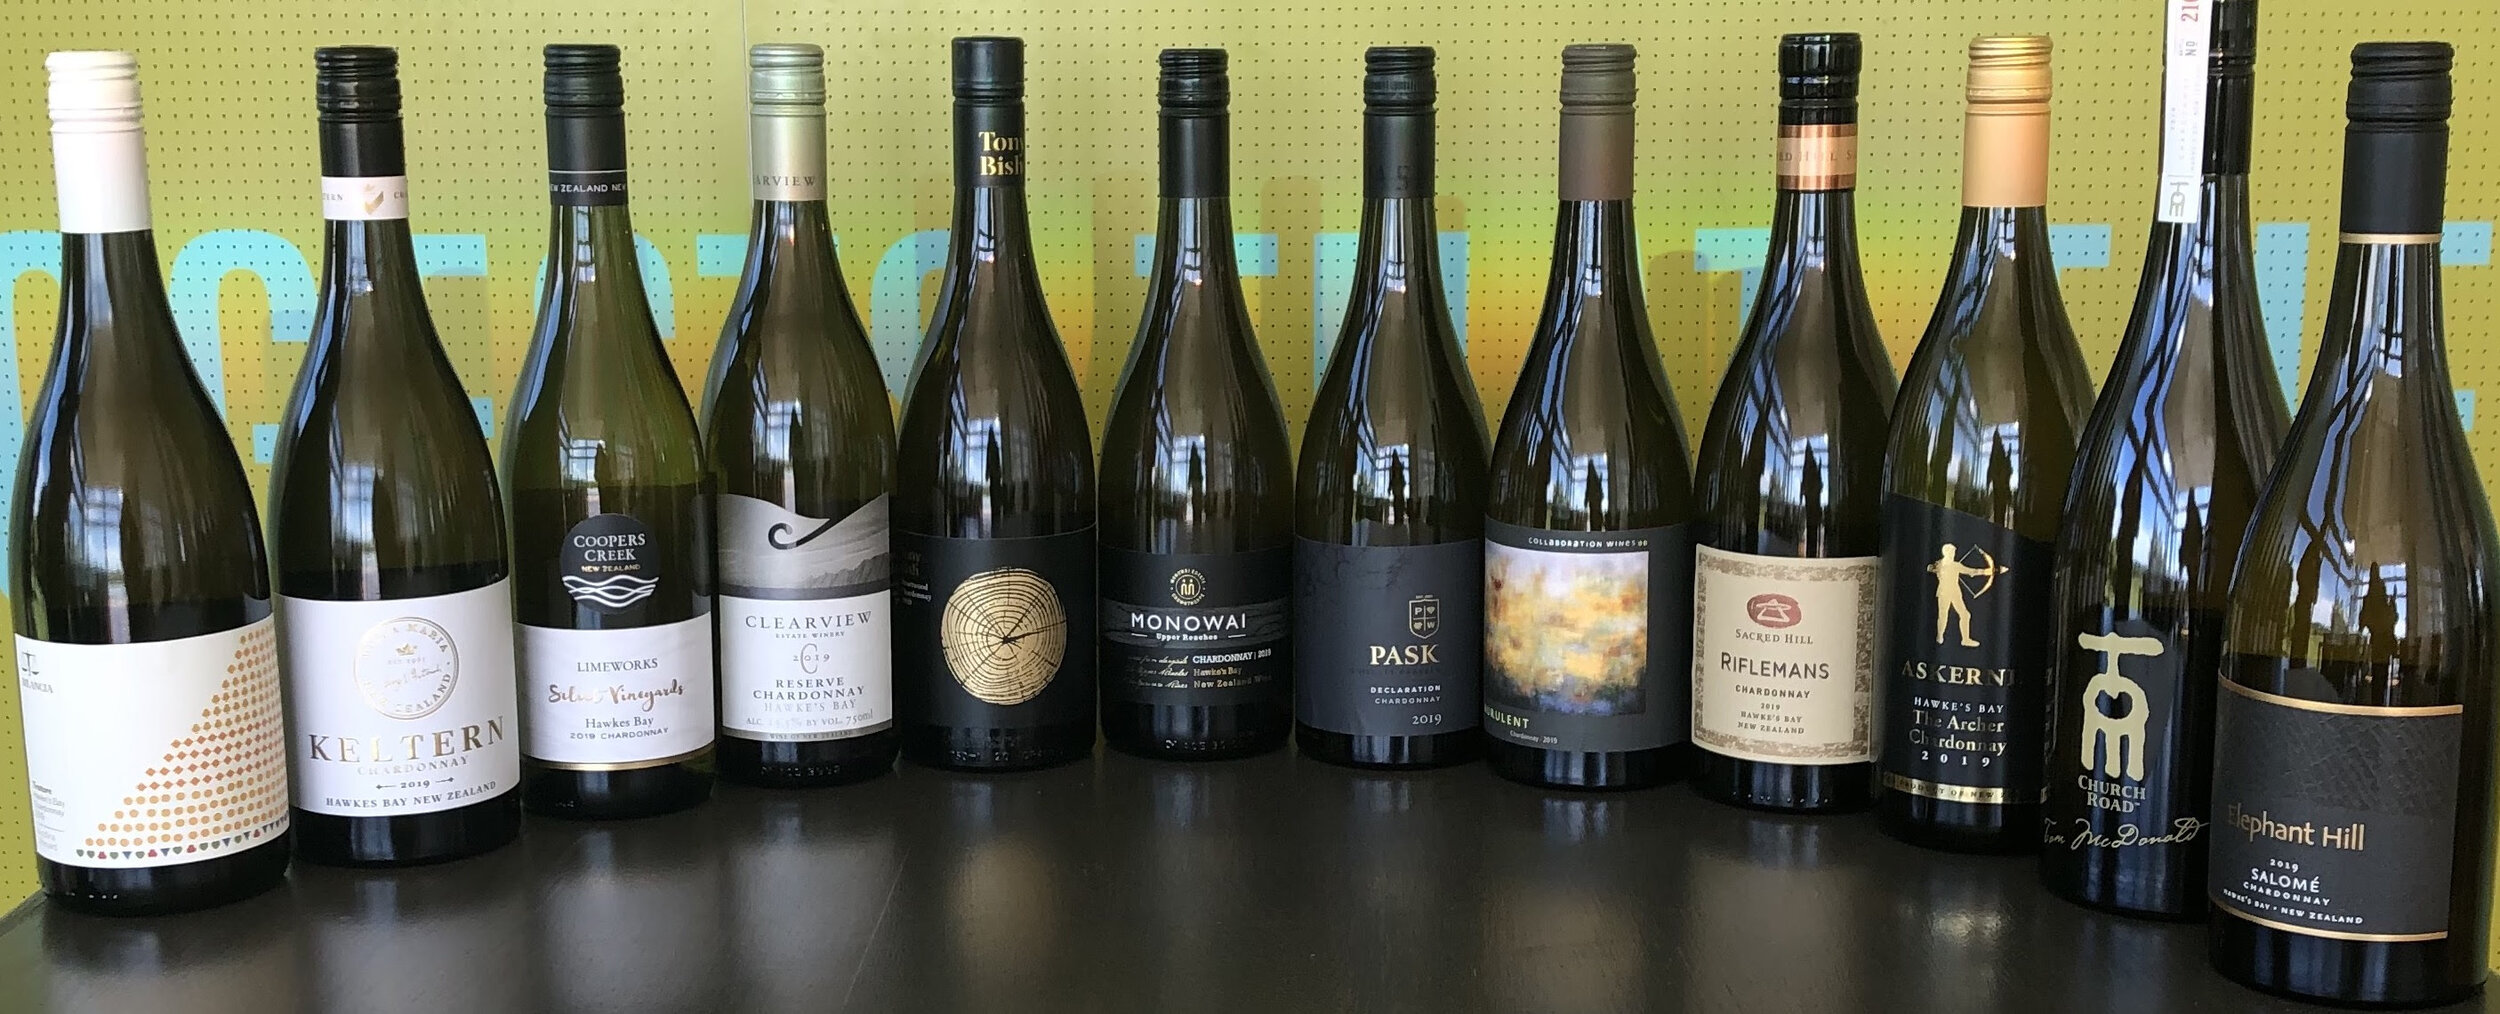 Cloudy Bay Chardonnay 2019 | Marlborough | New Zealand Wine